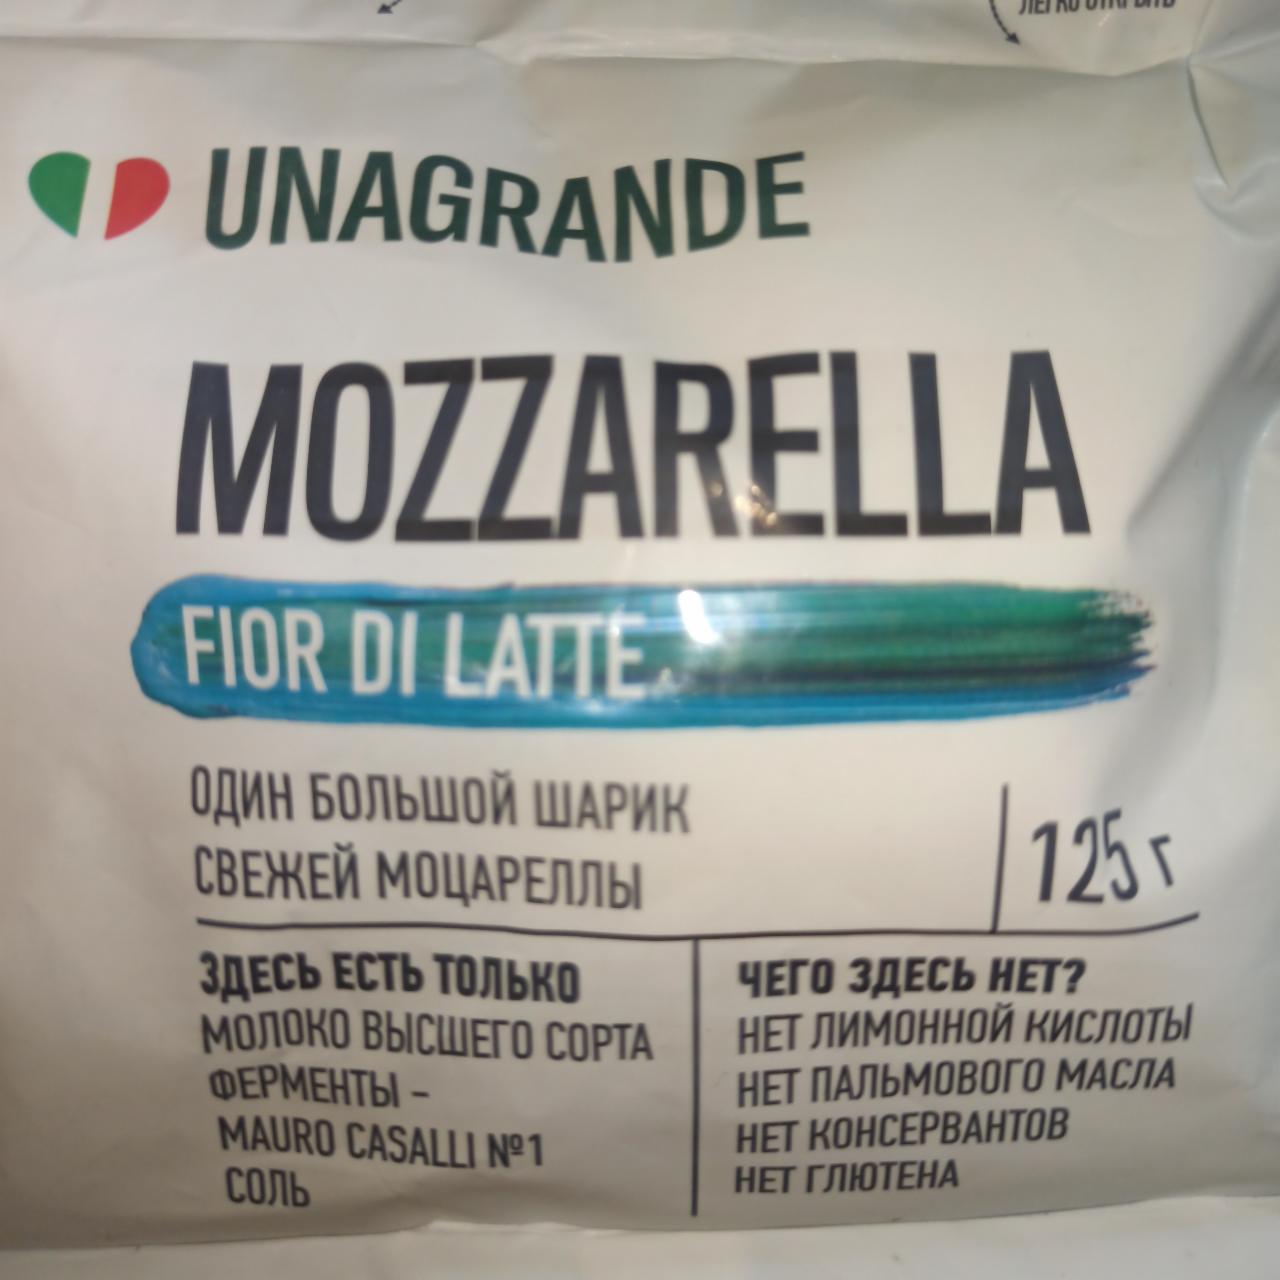 Фото - сыр mozzarella один большой шарик моцареллы Unagrande